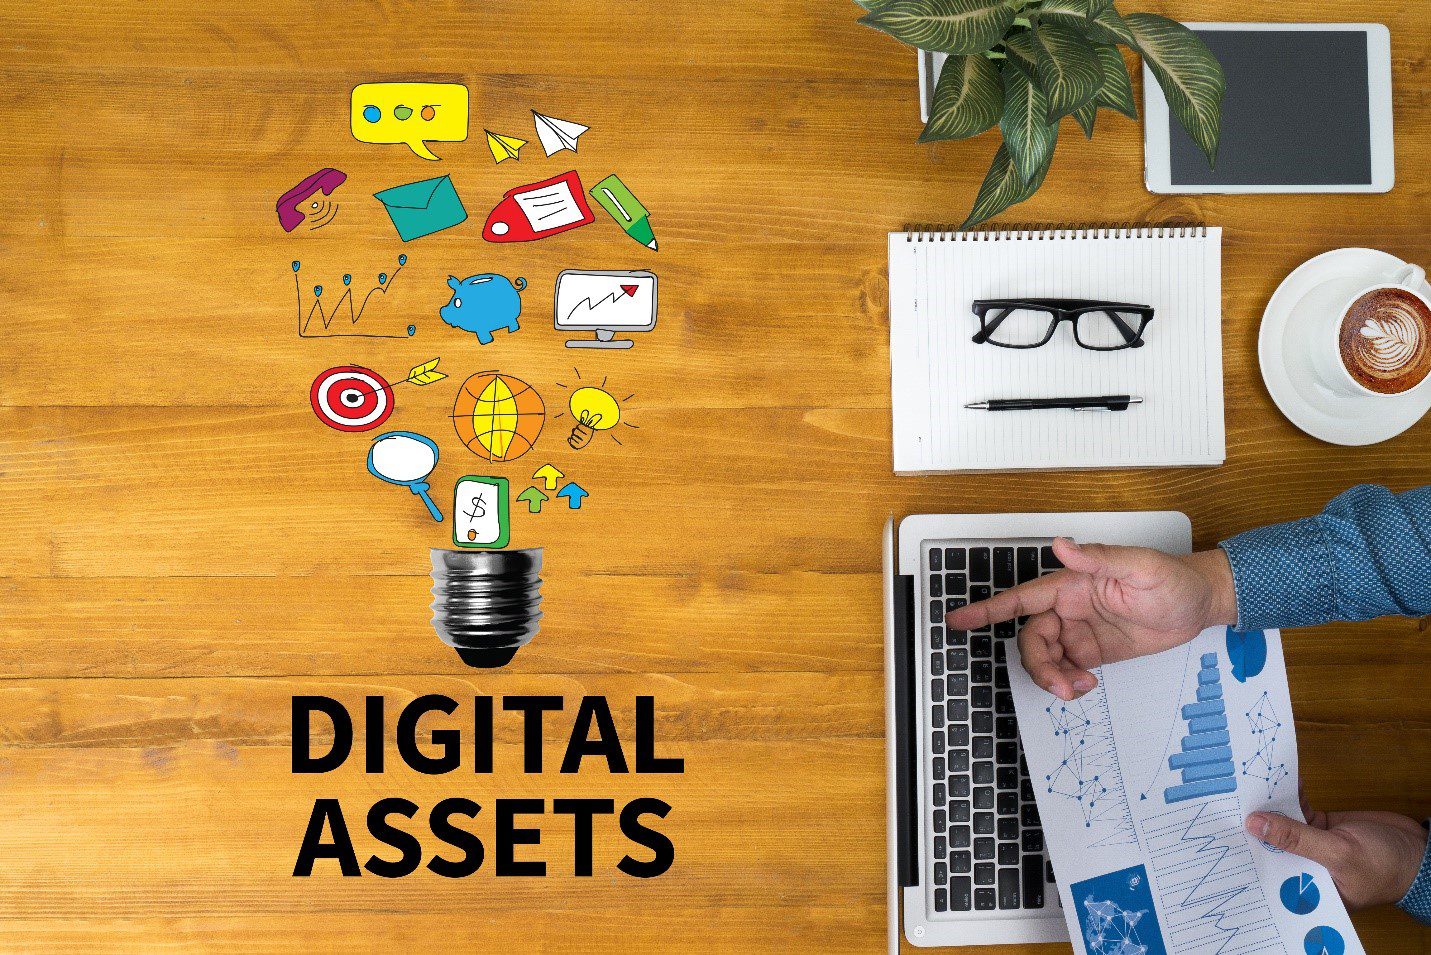 digital assets on wooden table